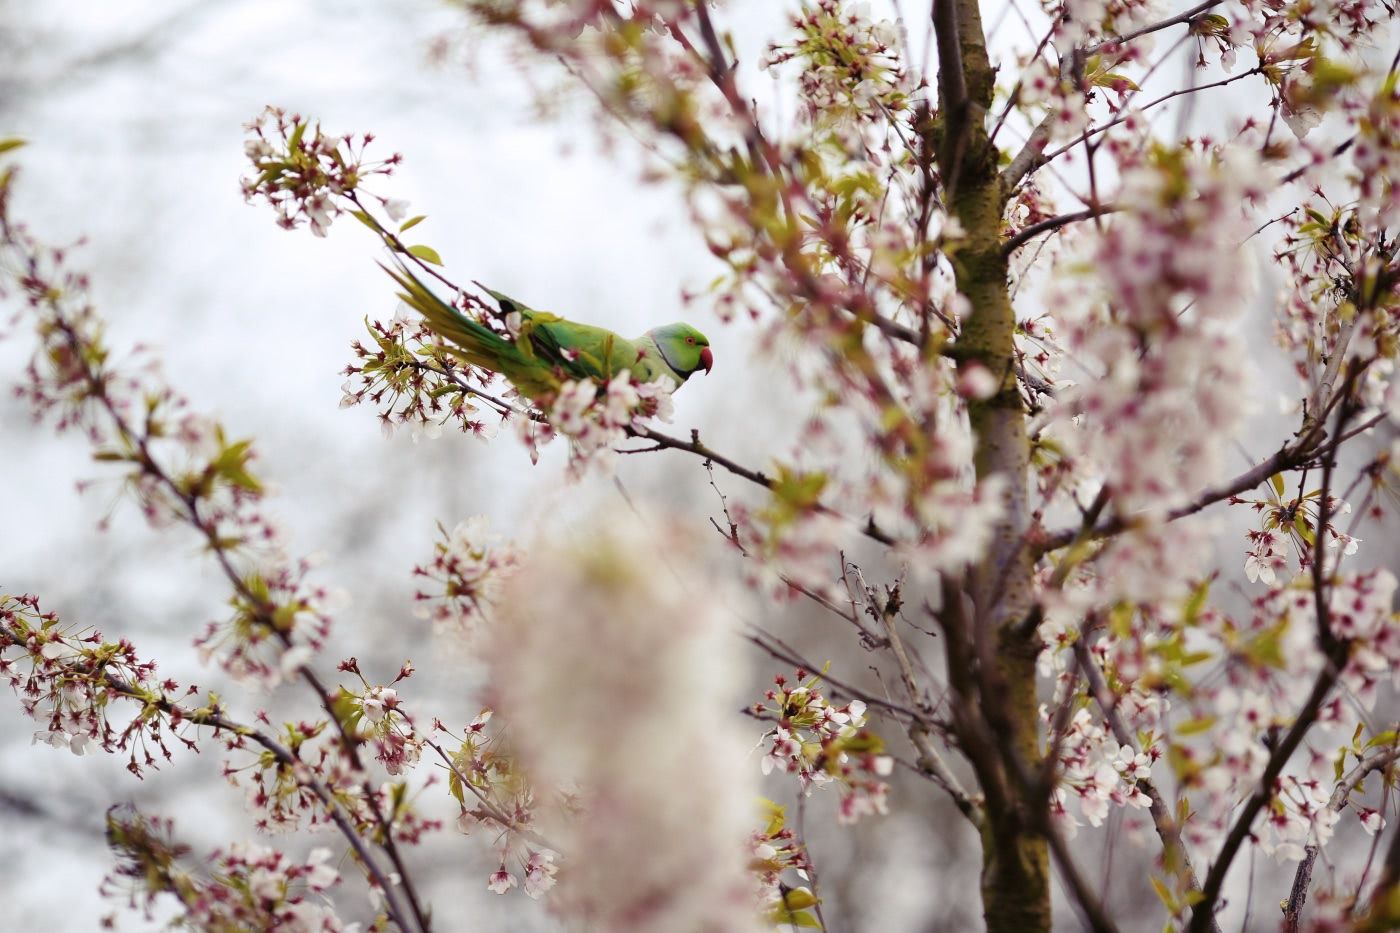 A parakeet amidst cherry blossoms